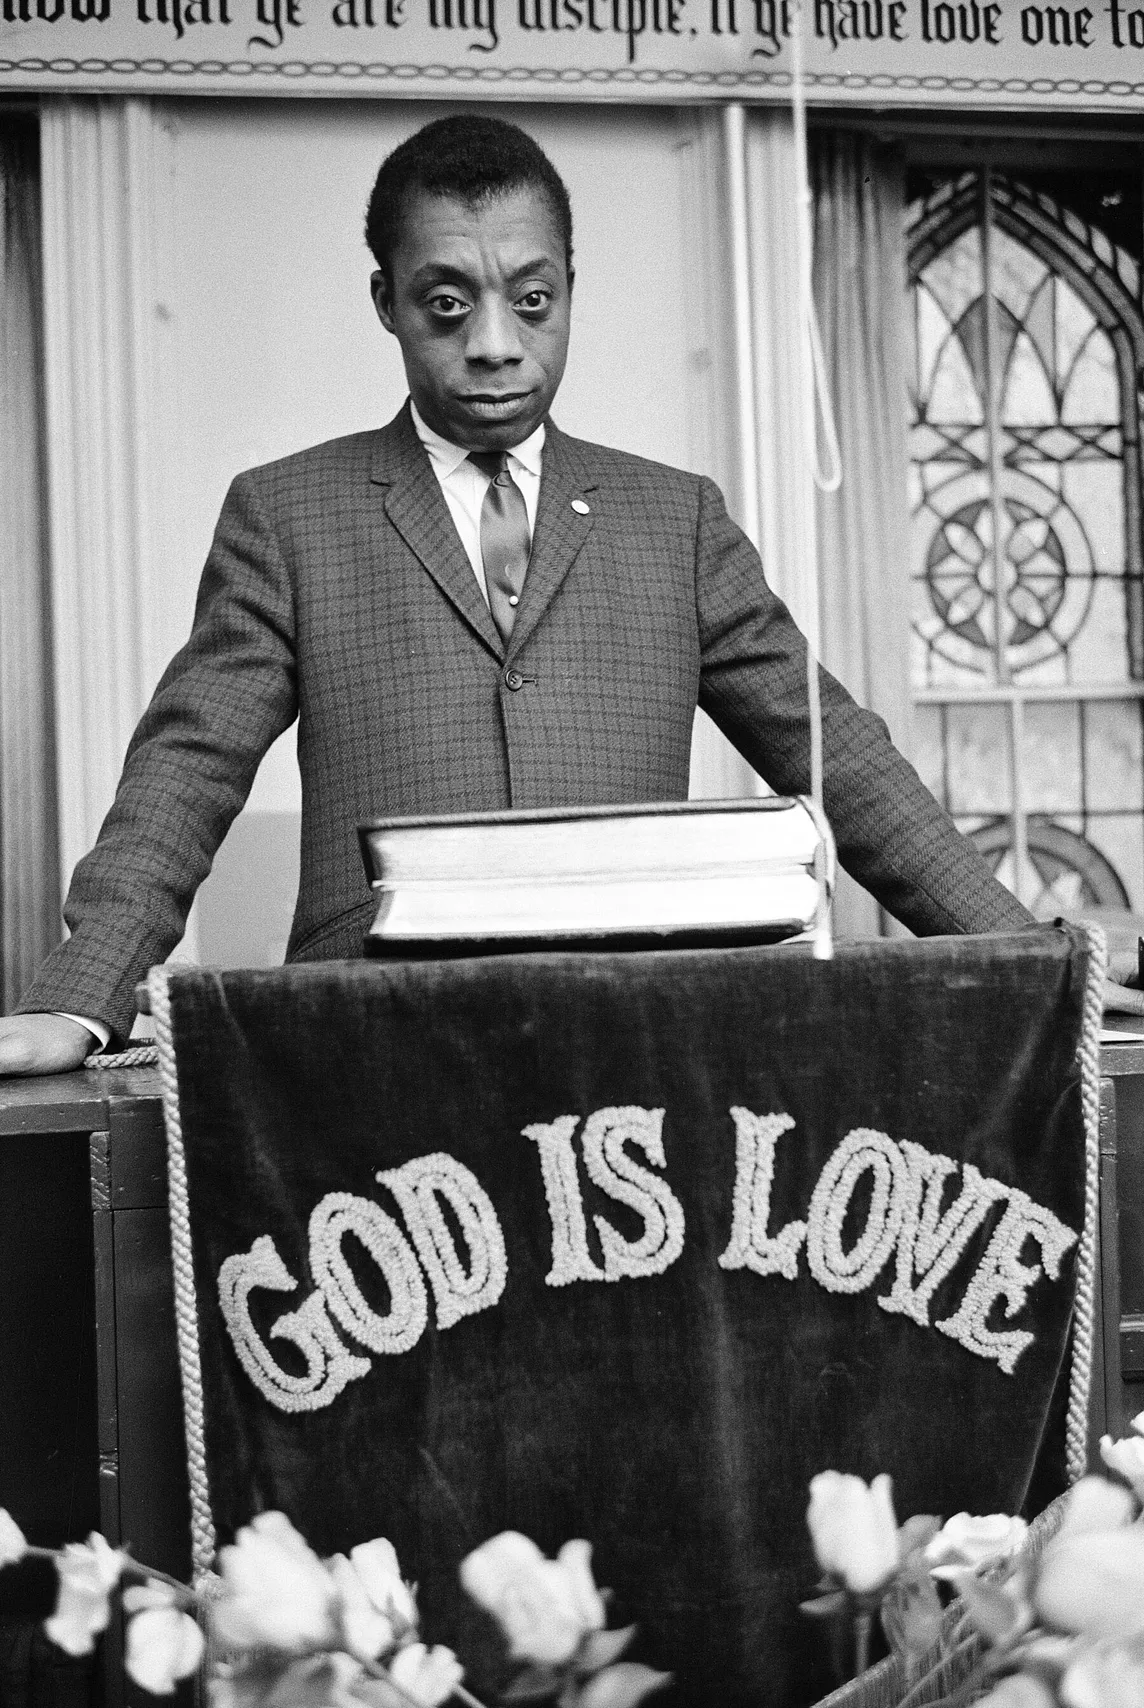 James Baldwin at the pulpit